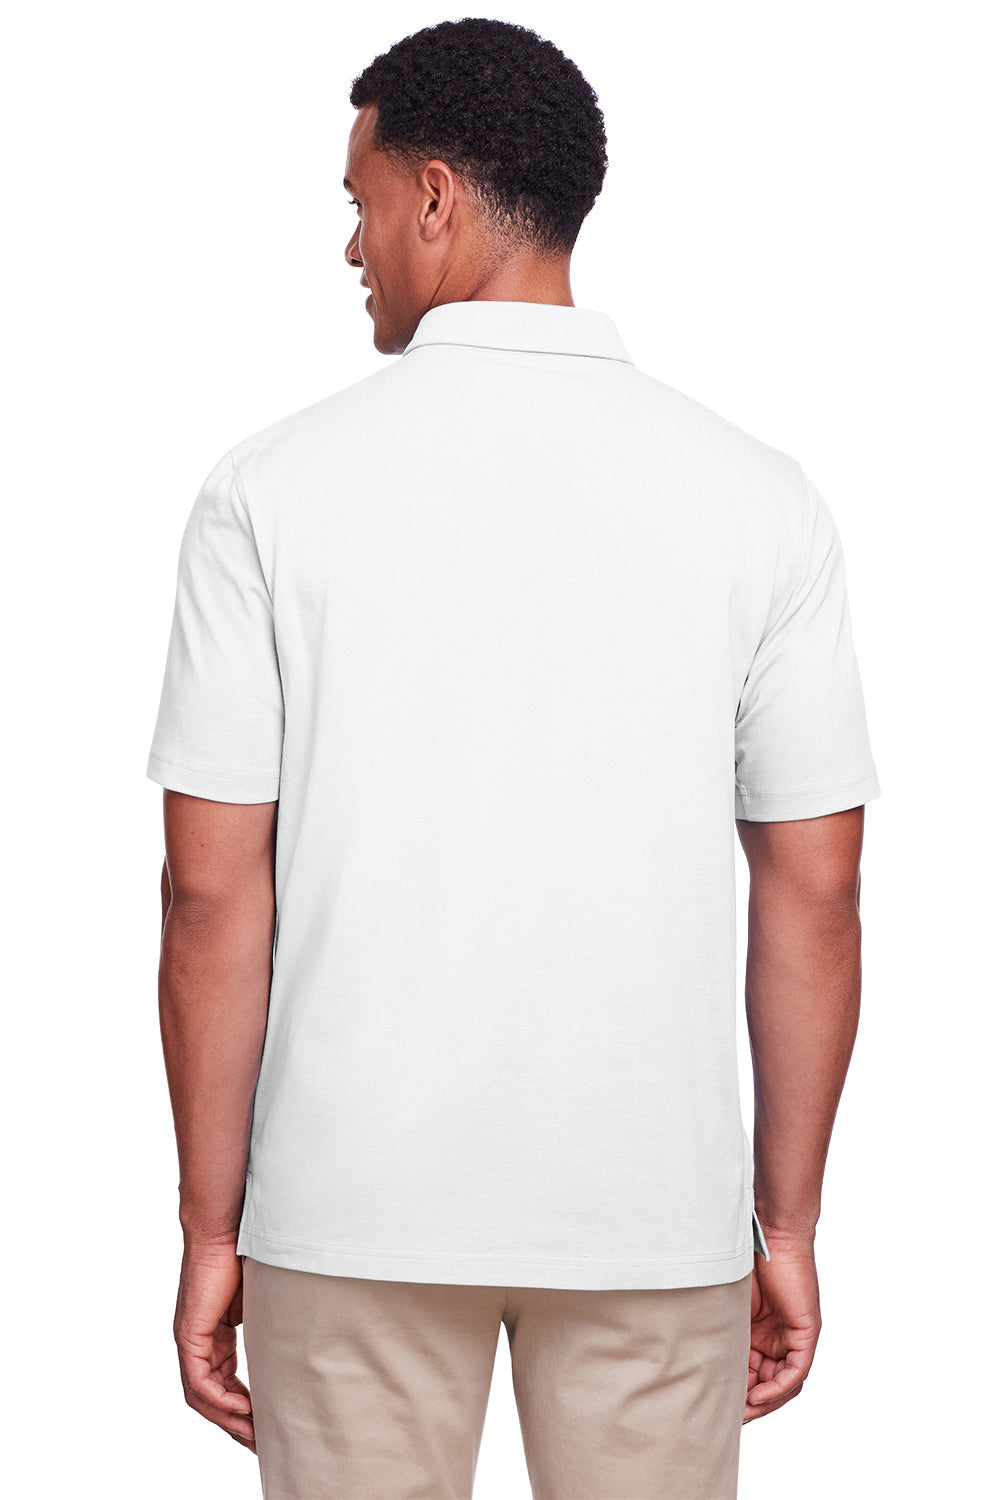 UltraClub UC105 Mens Lakeshore Performance Moisture Wicking Short Sleeve Polo Shirt White Back